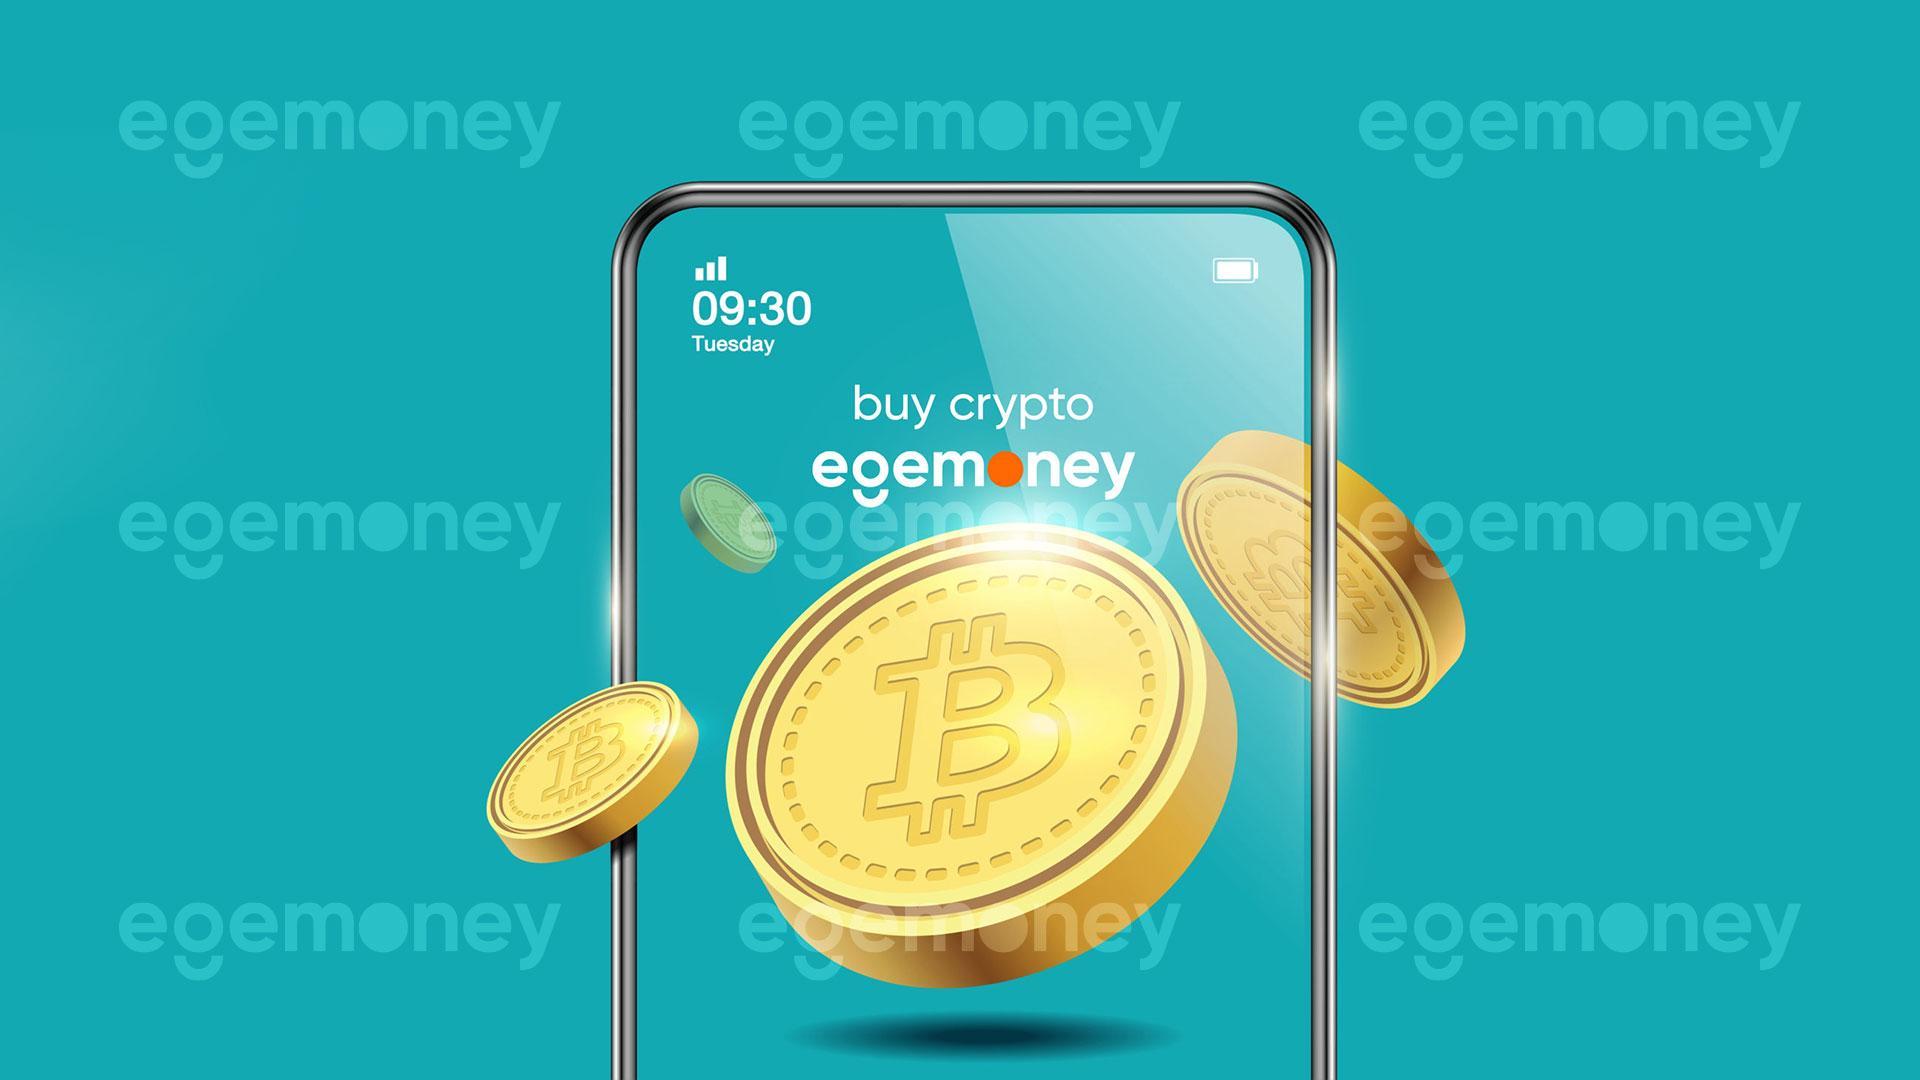 How To Buy Cryptocurrency With EgeMoney?